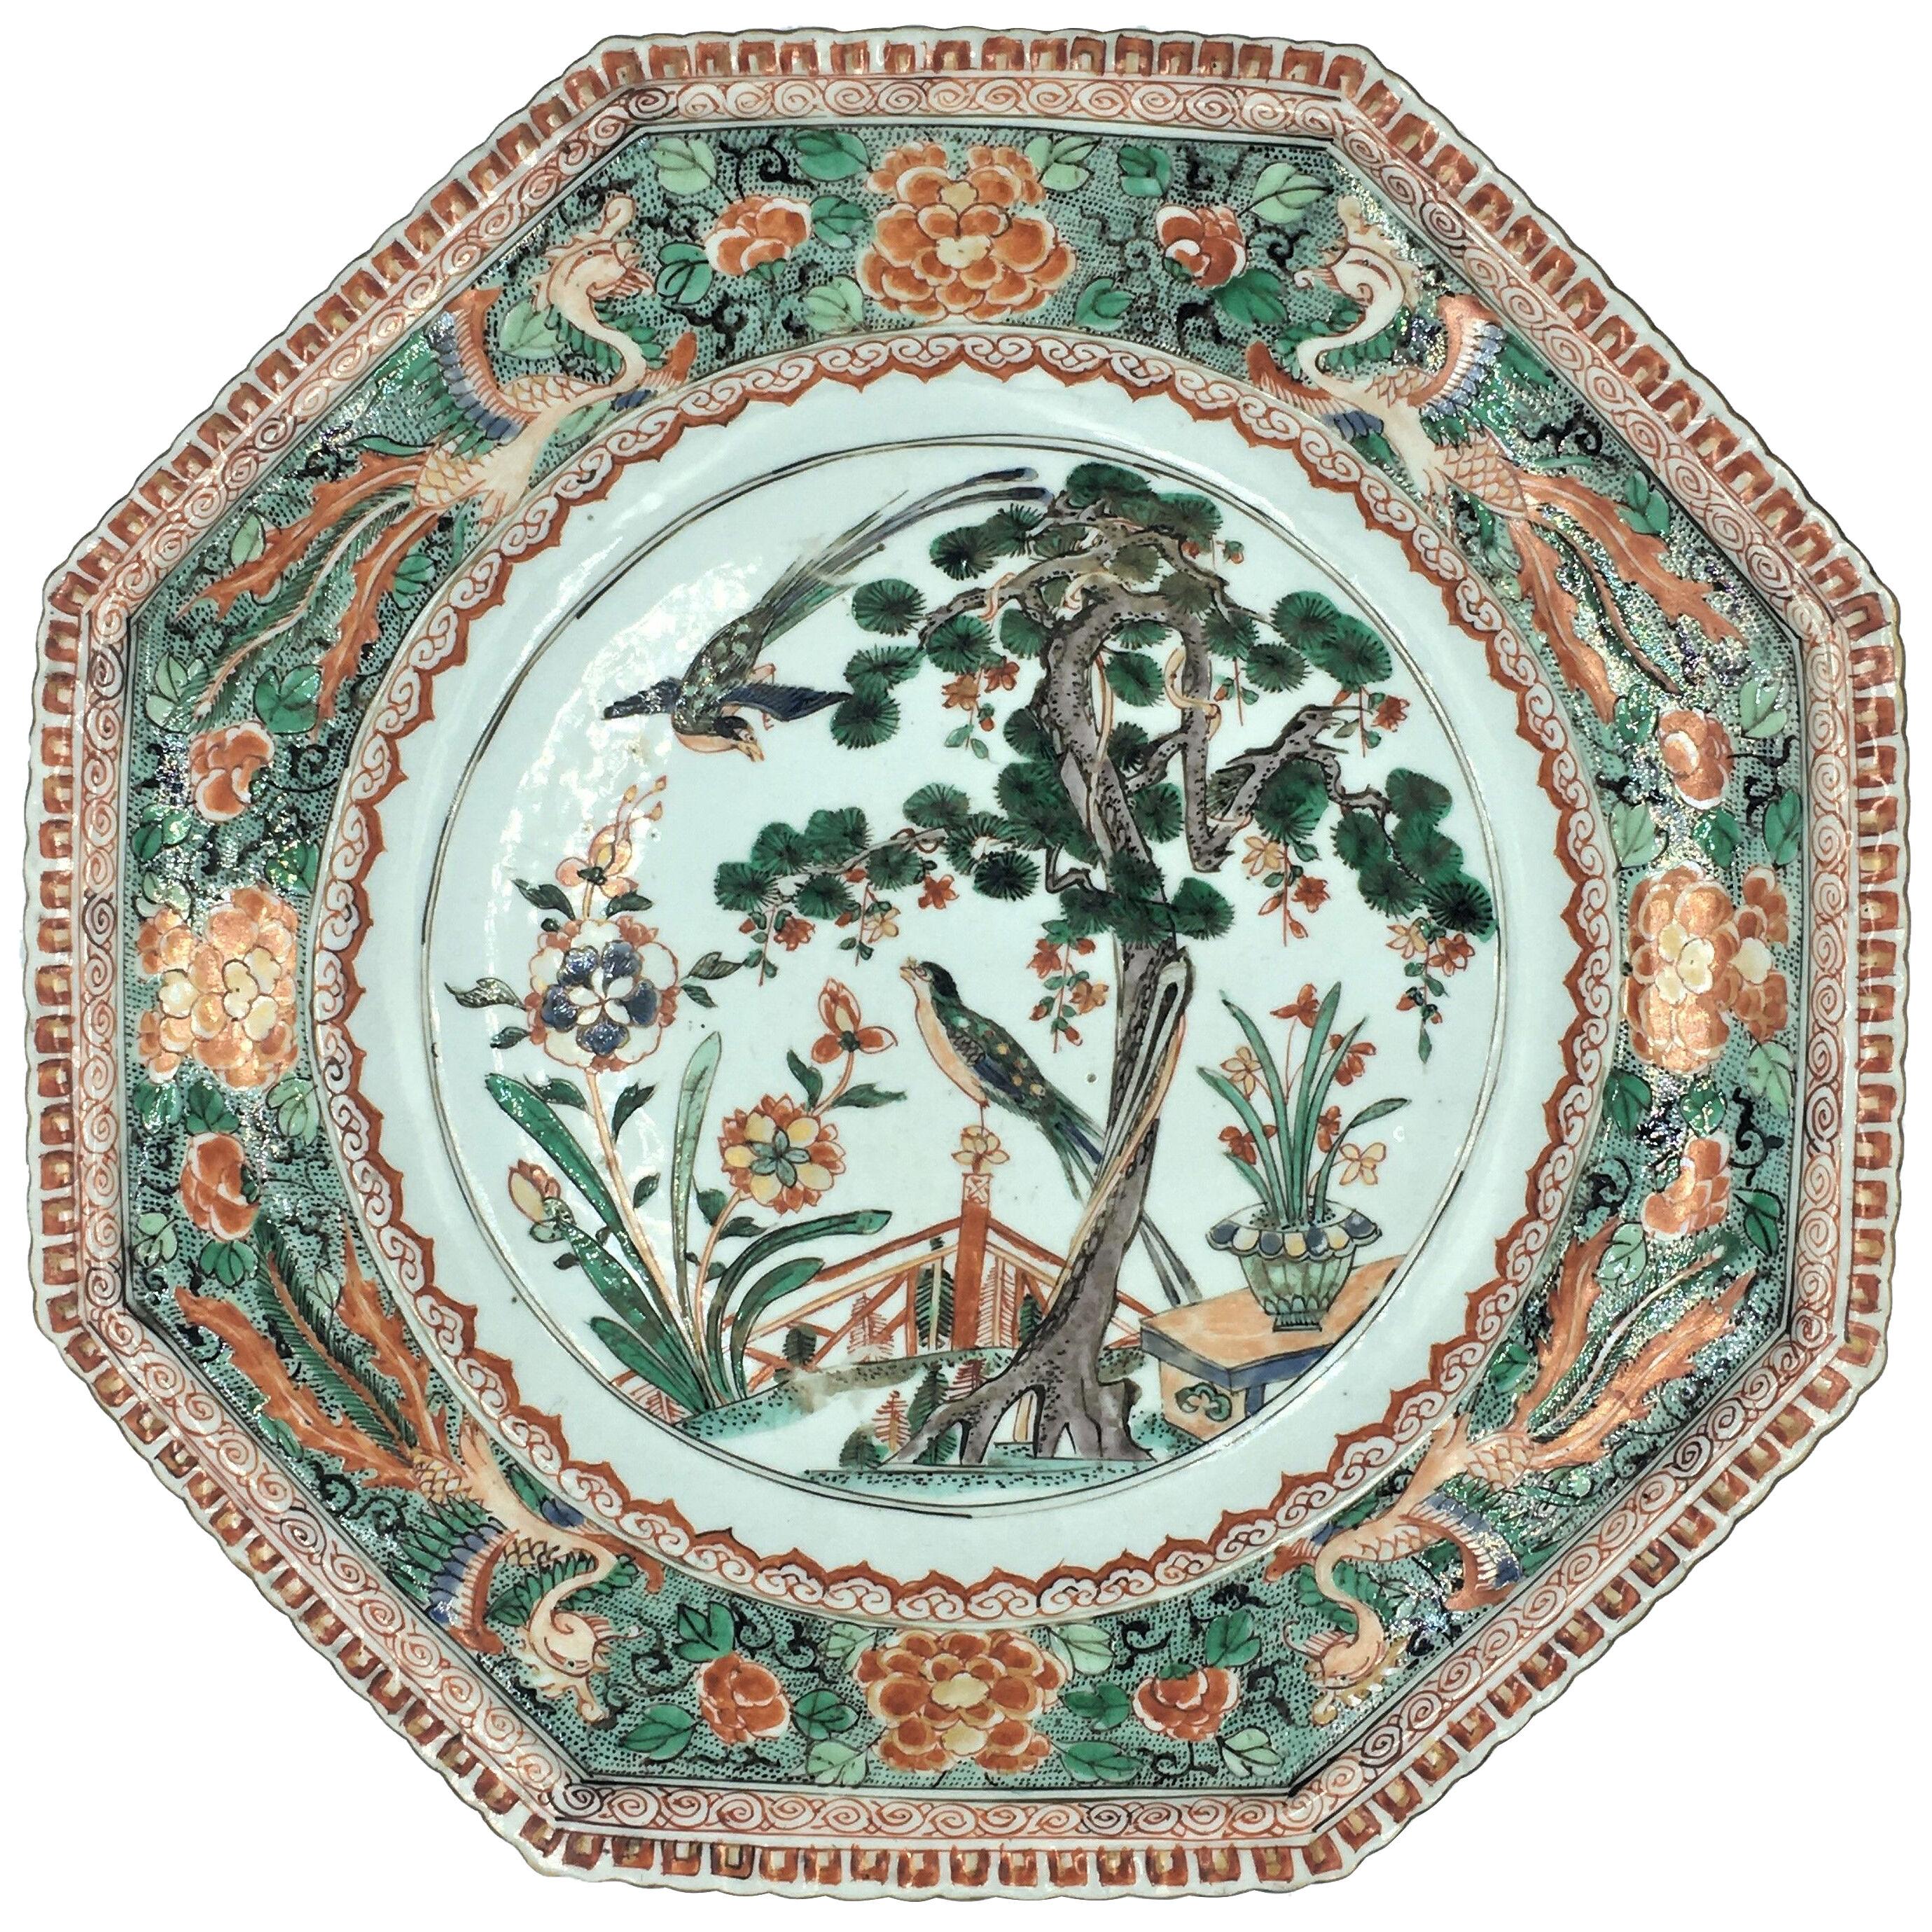 Smaller Kangxi period plate